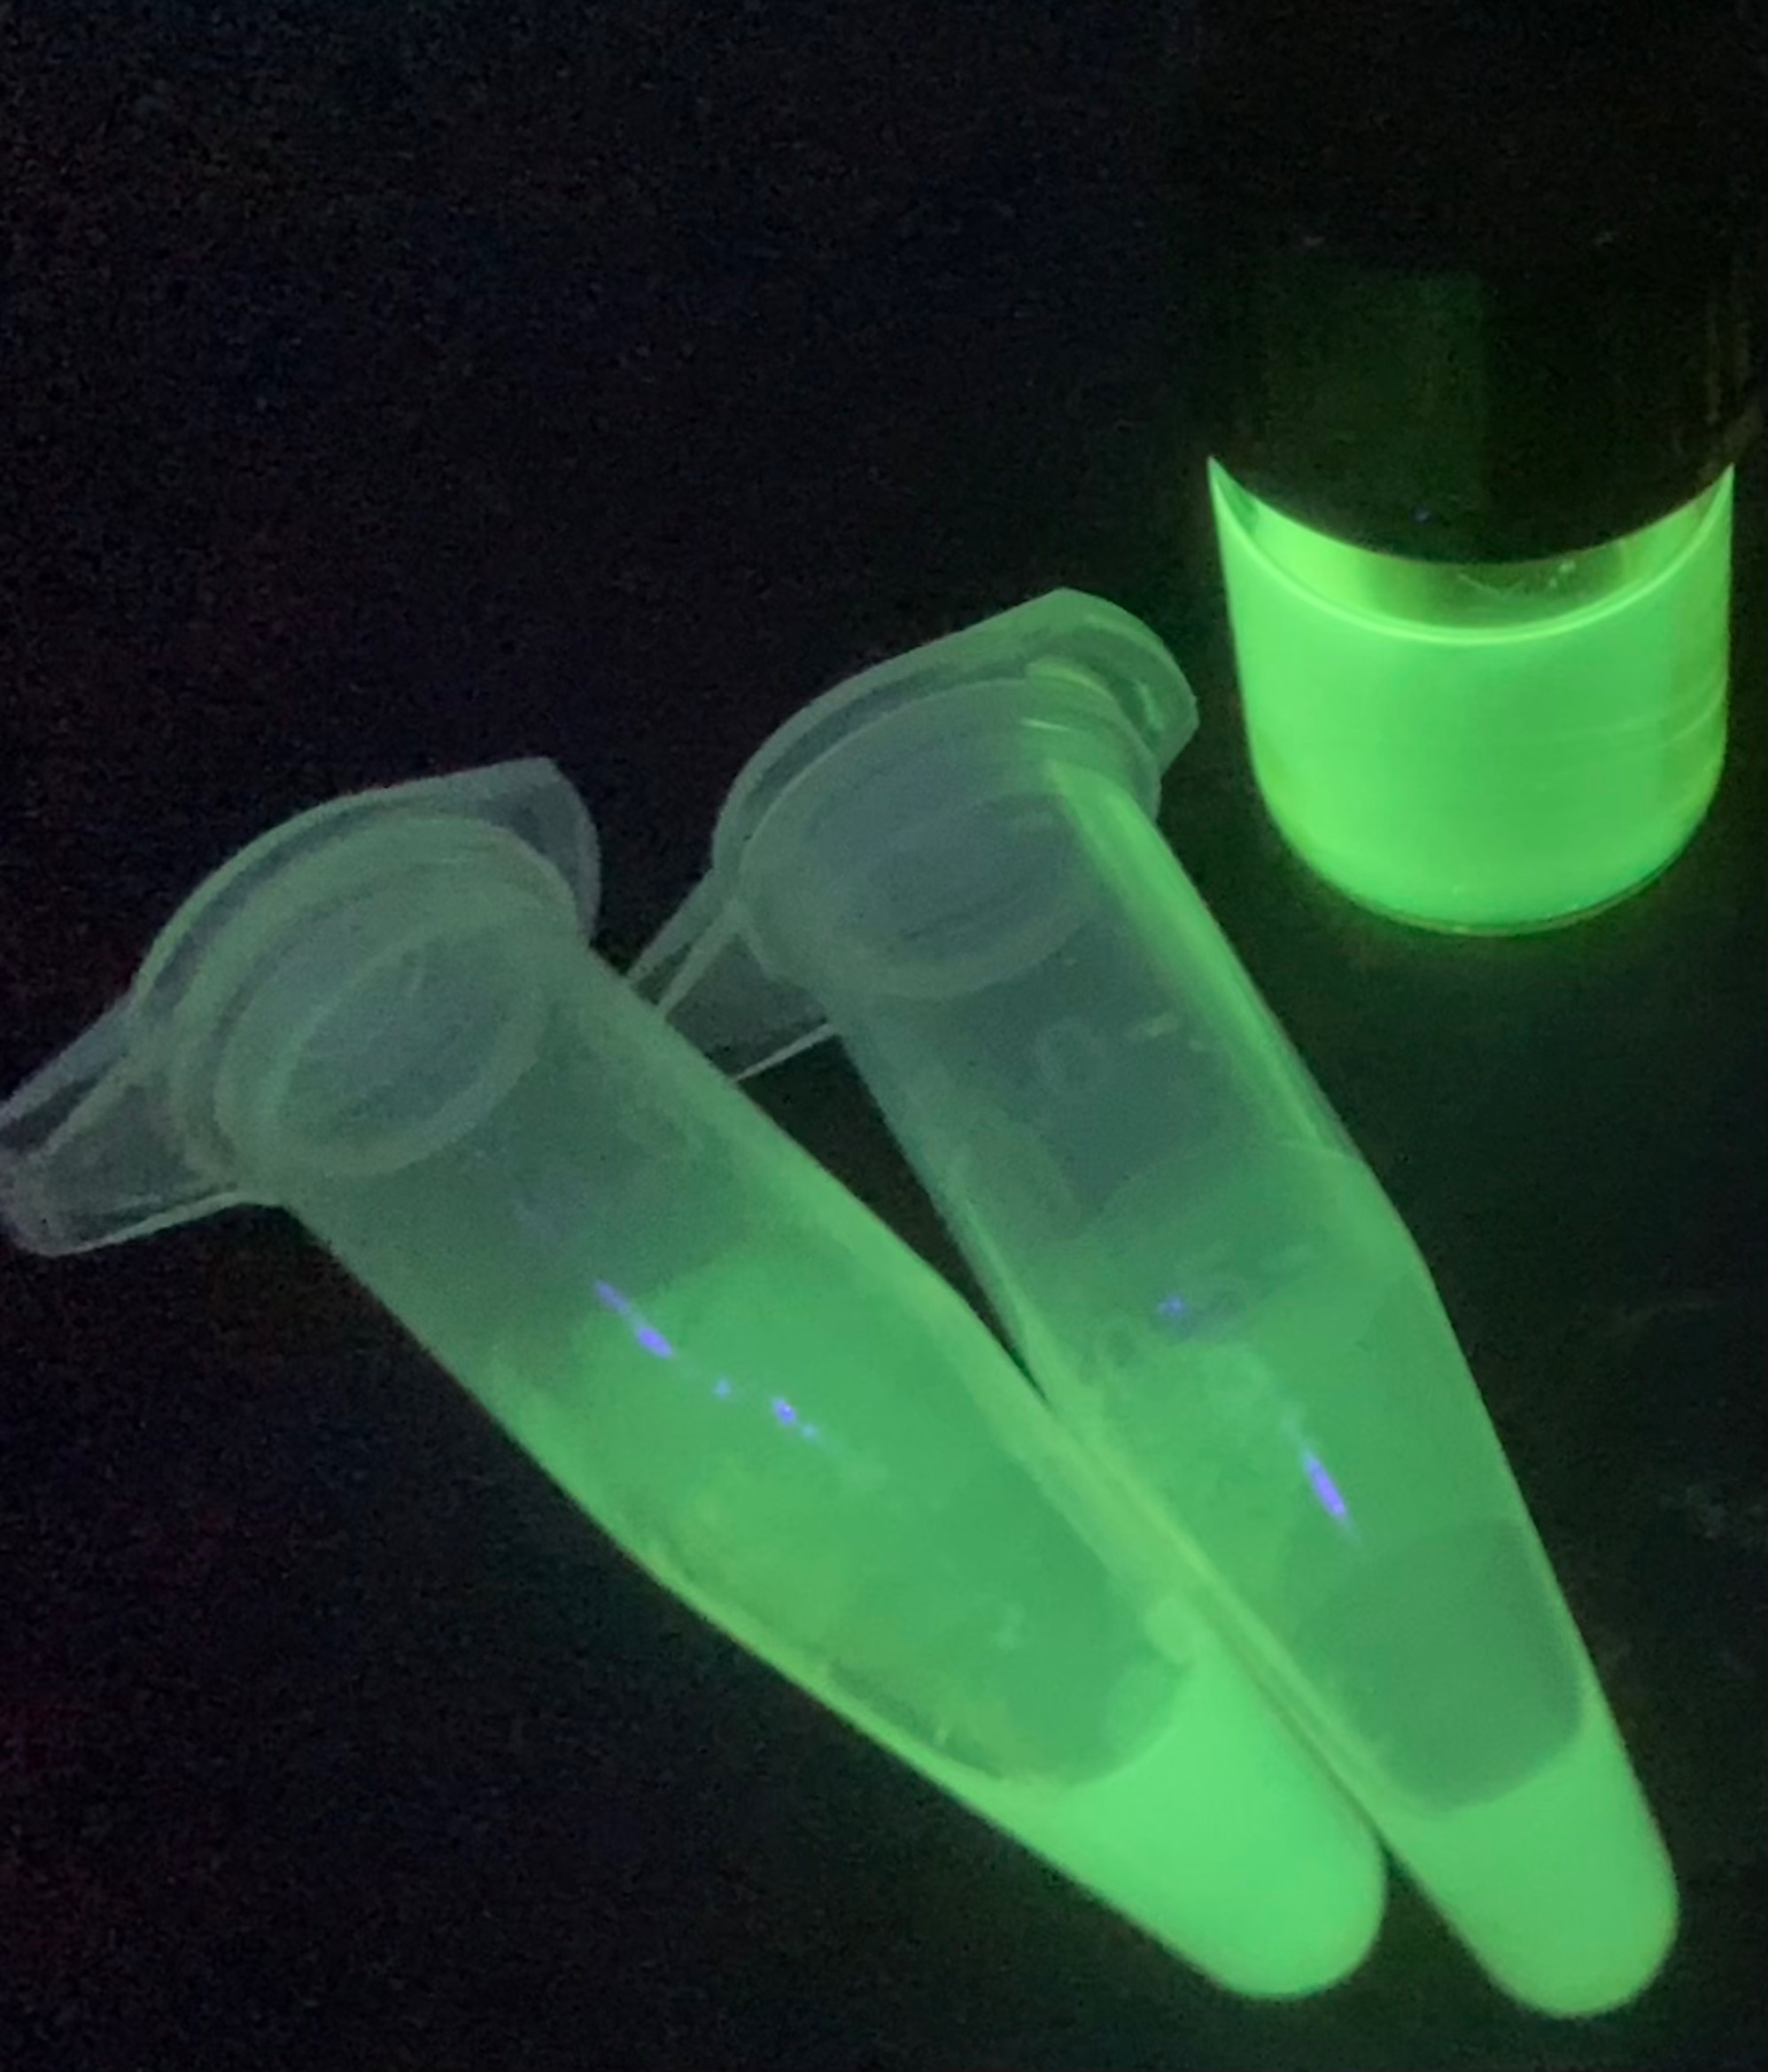 Extracted Dinoflagellate green